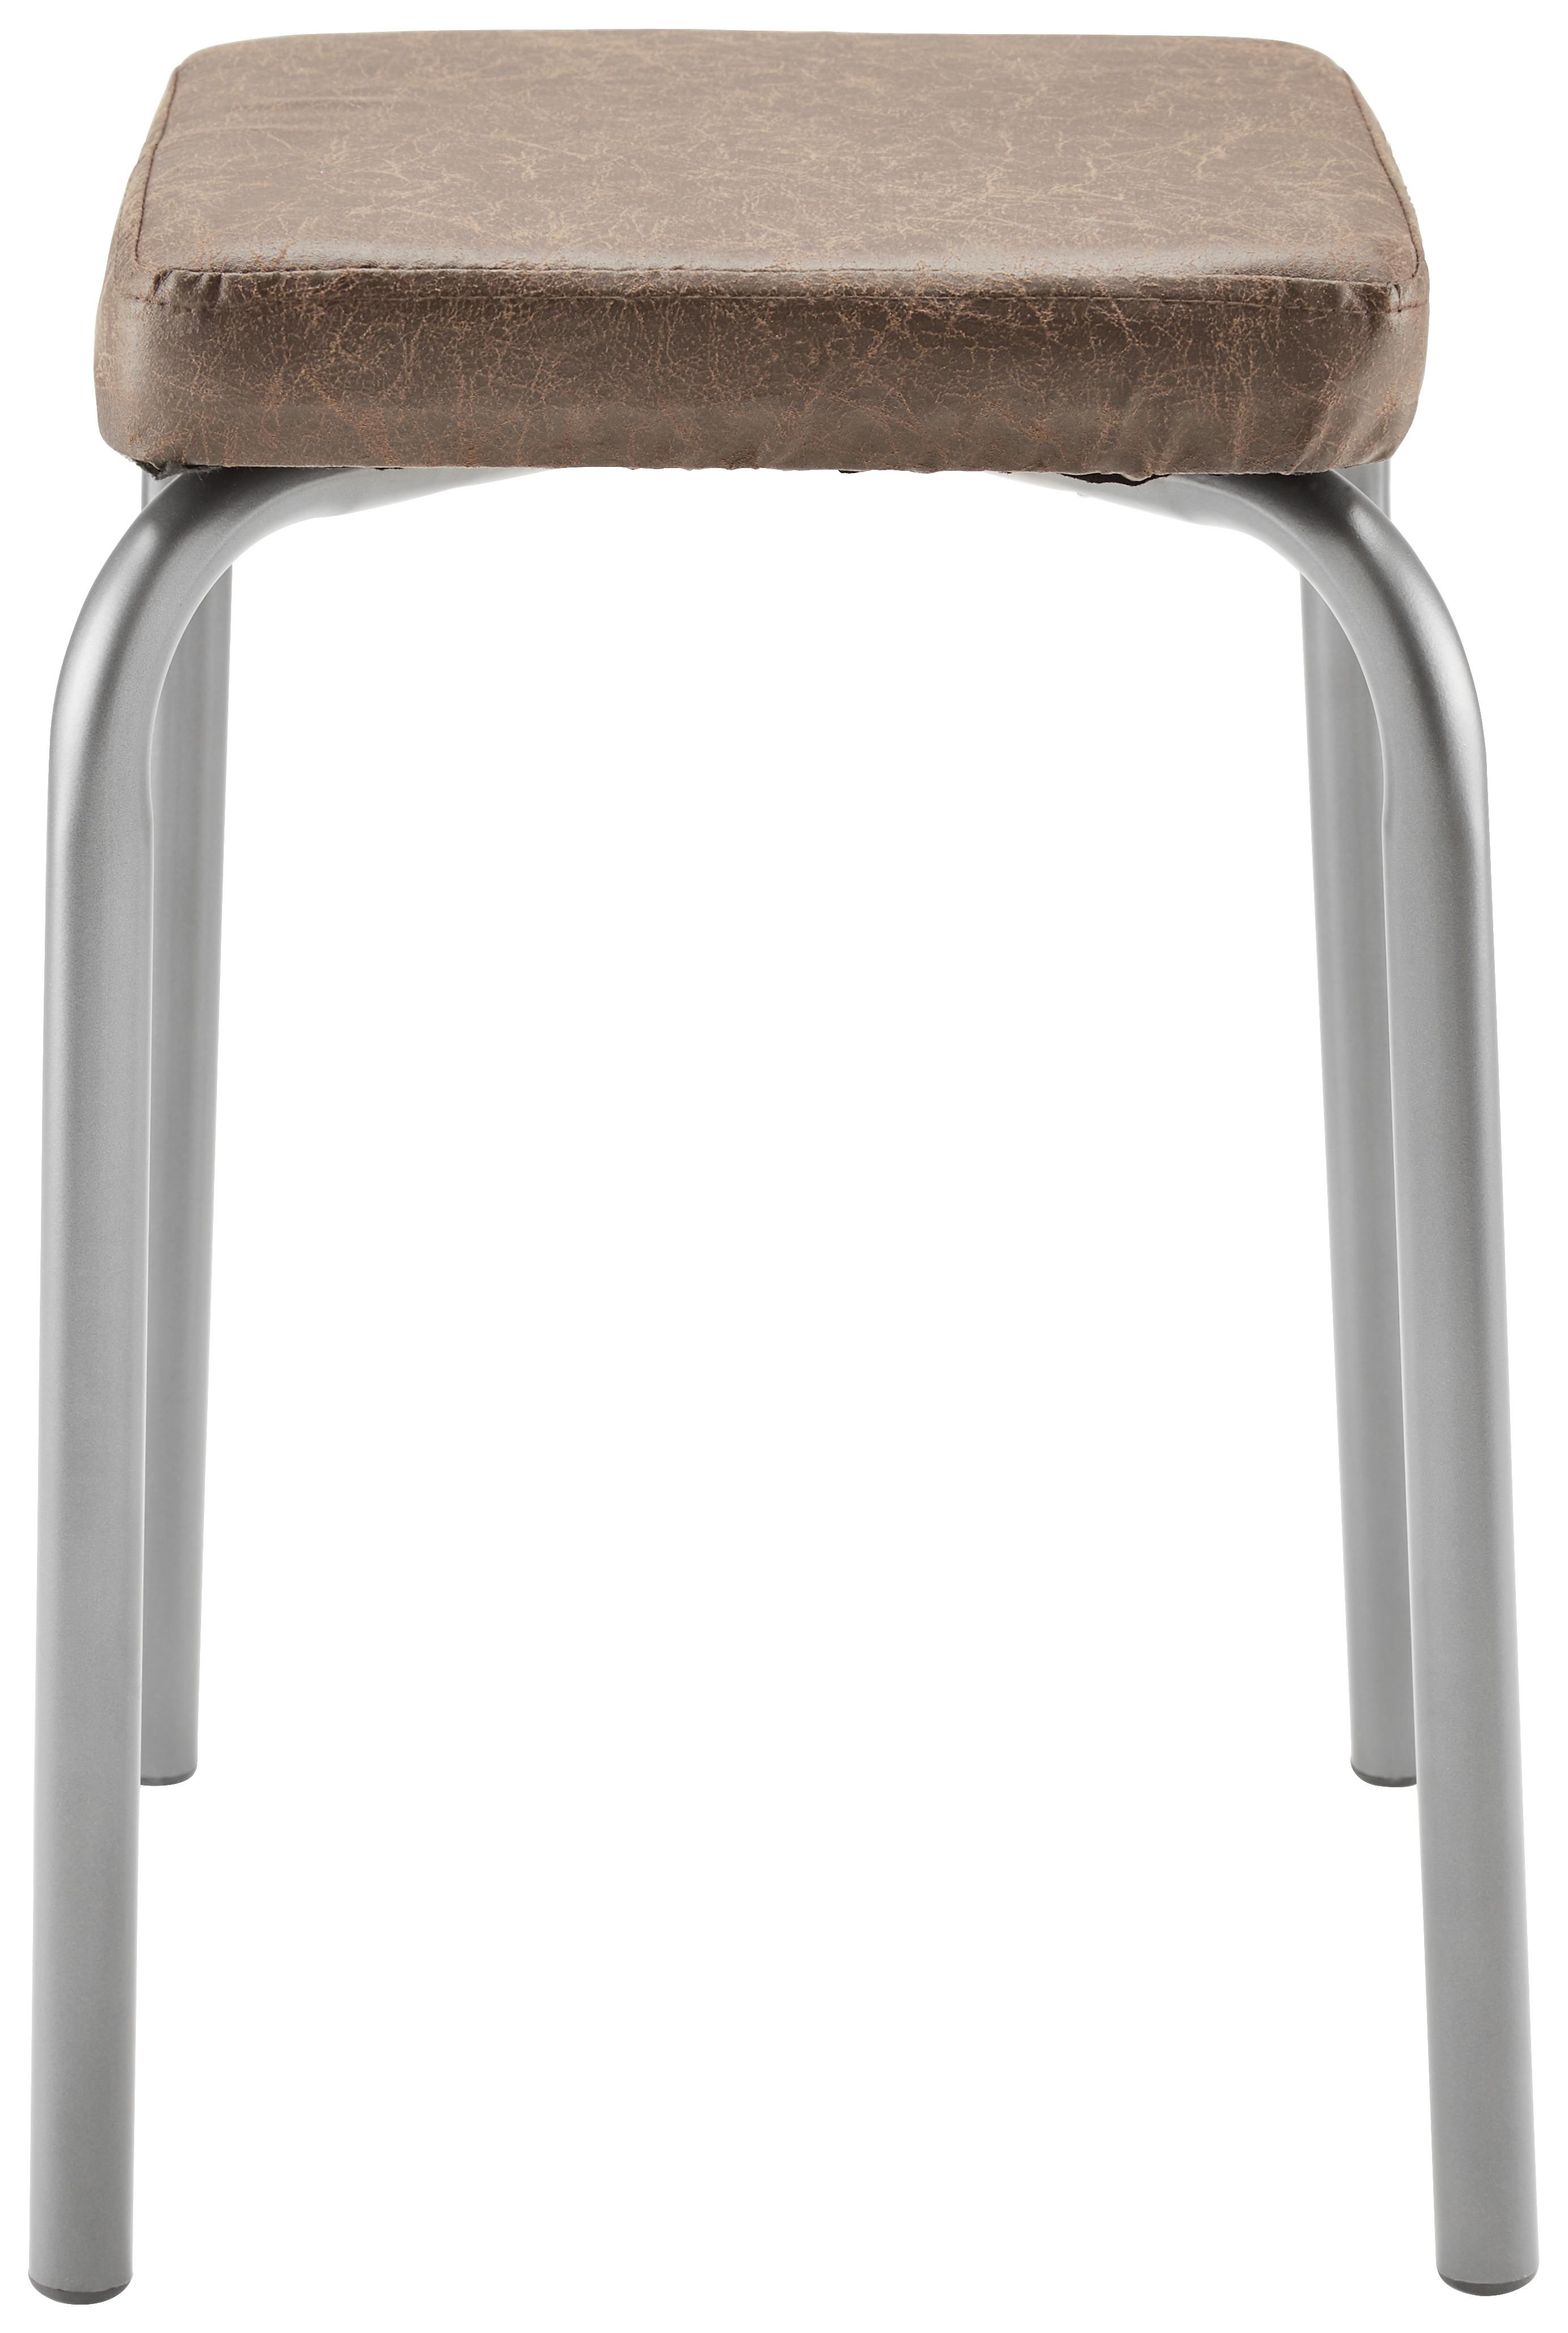 Složiva Stolica Smeđa Boja - smeđa, Konventionell, drvni materijal/metal (36/49/36cm) - Modern Living